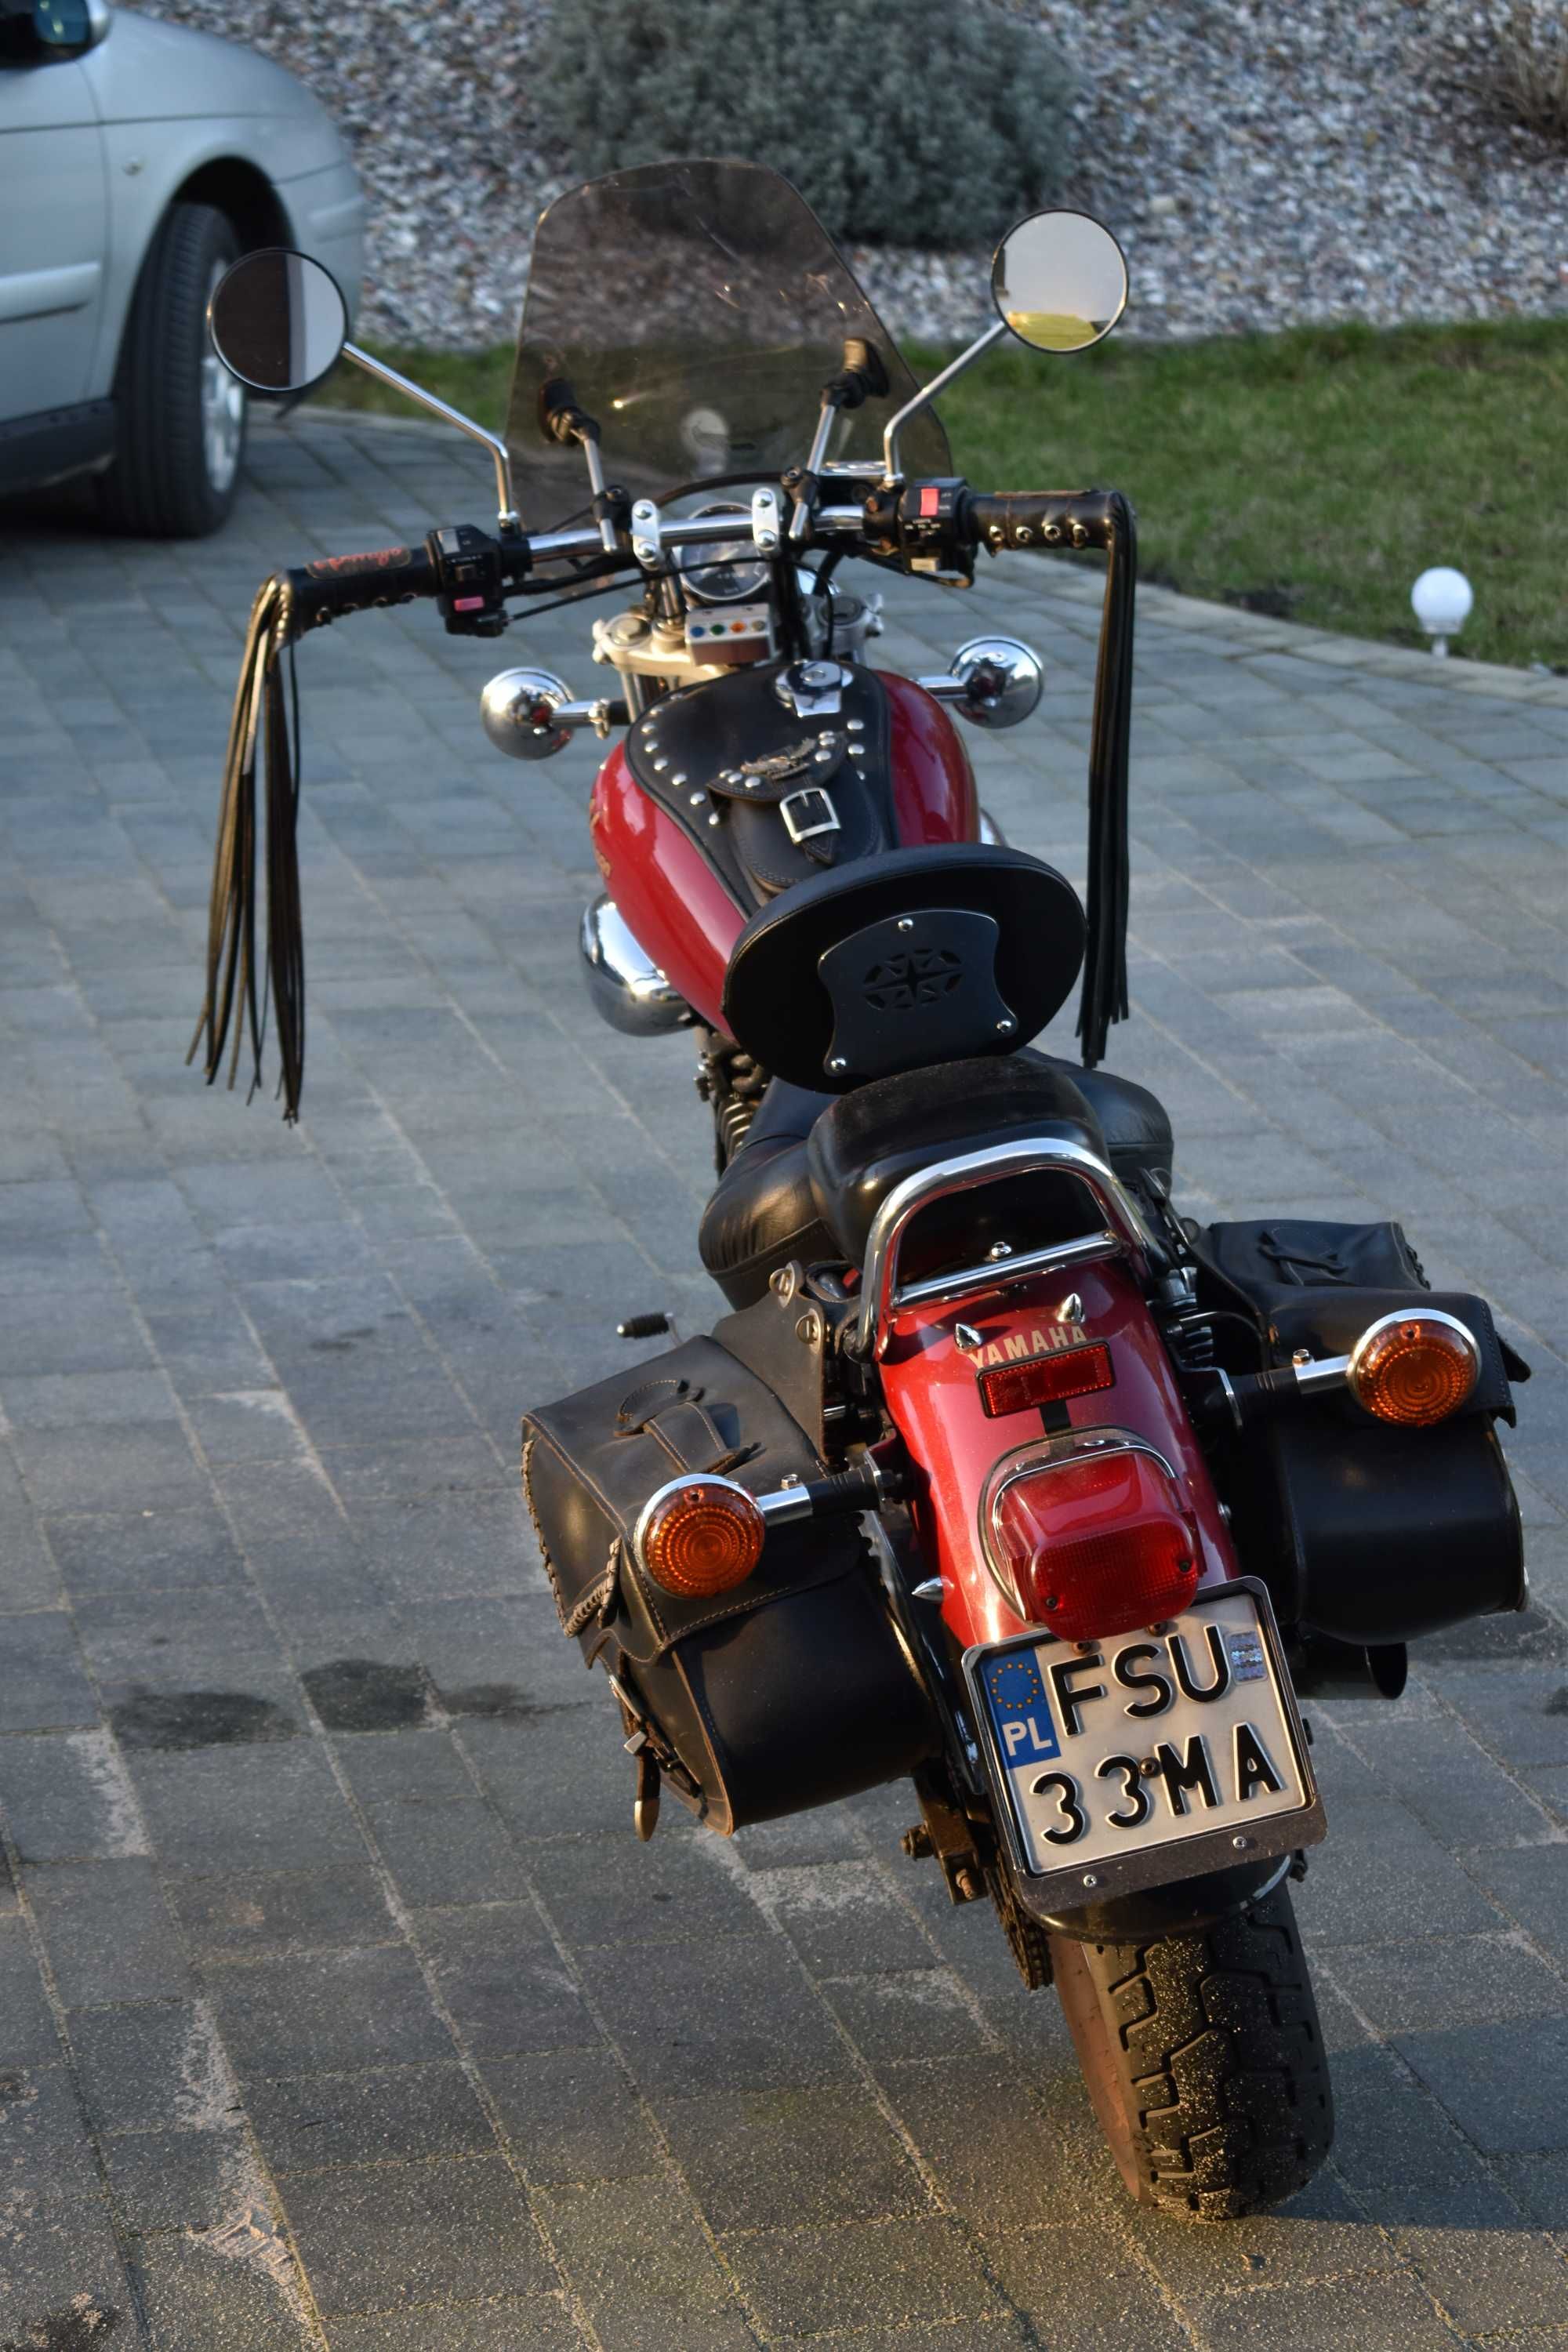 Motocykl Yamaha XV 250